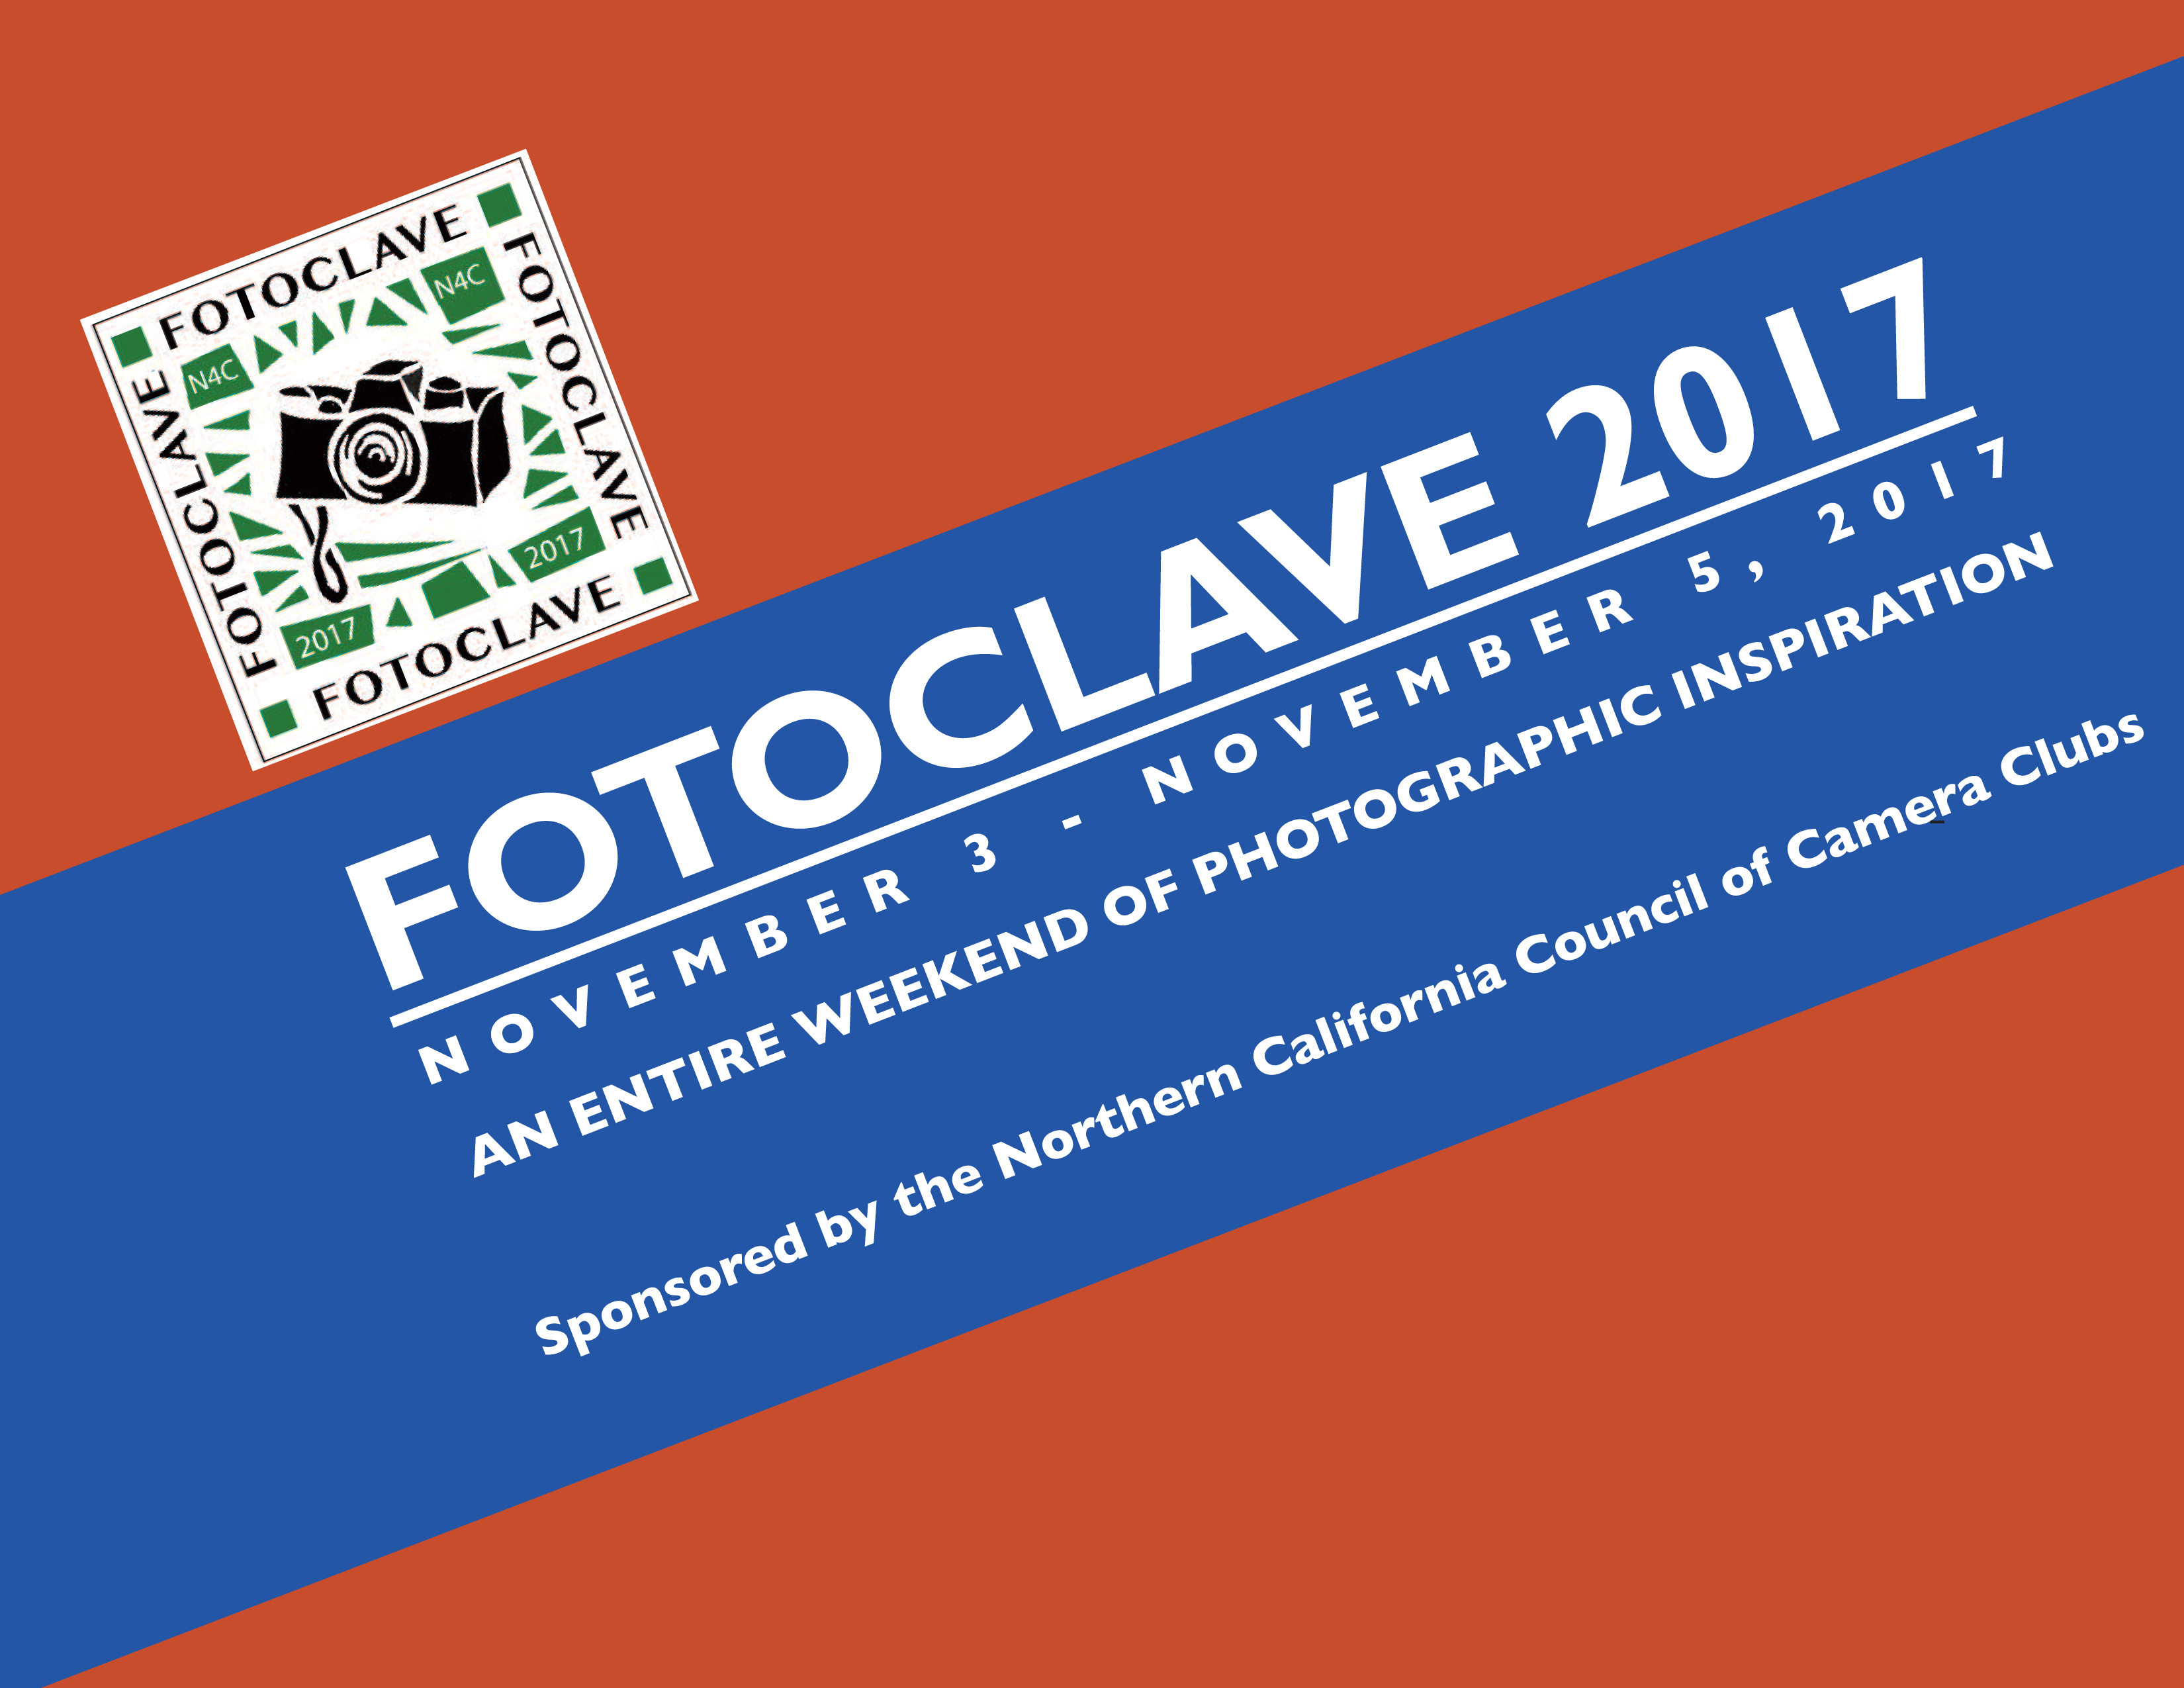 FotoClave 2017 program flyer